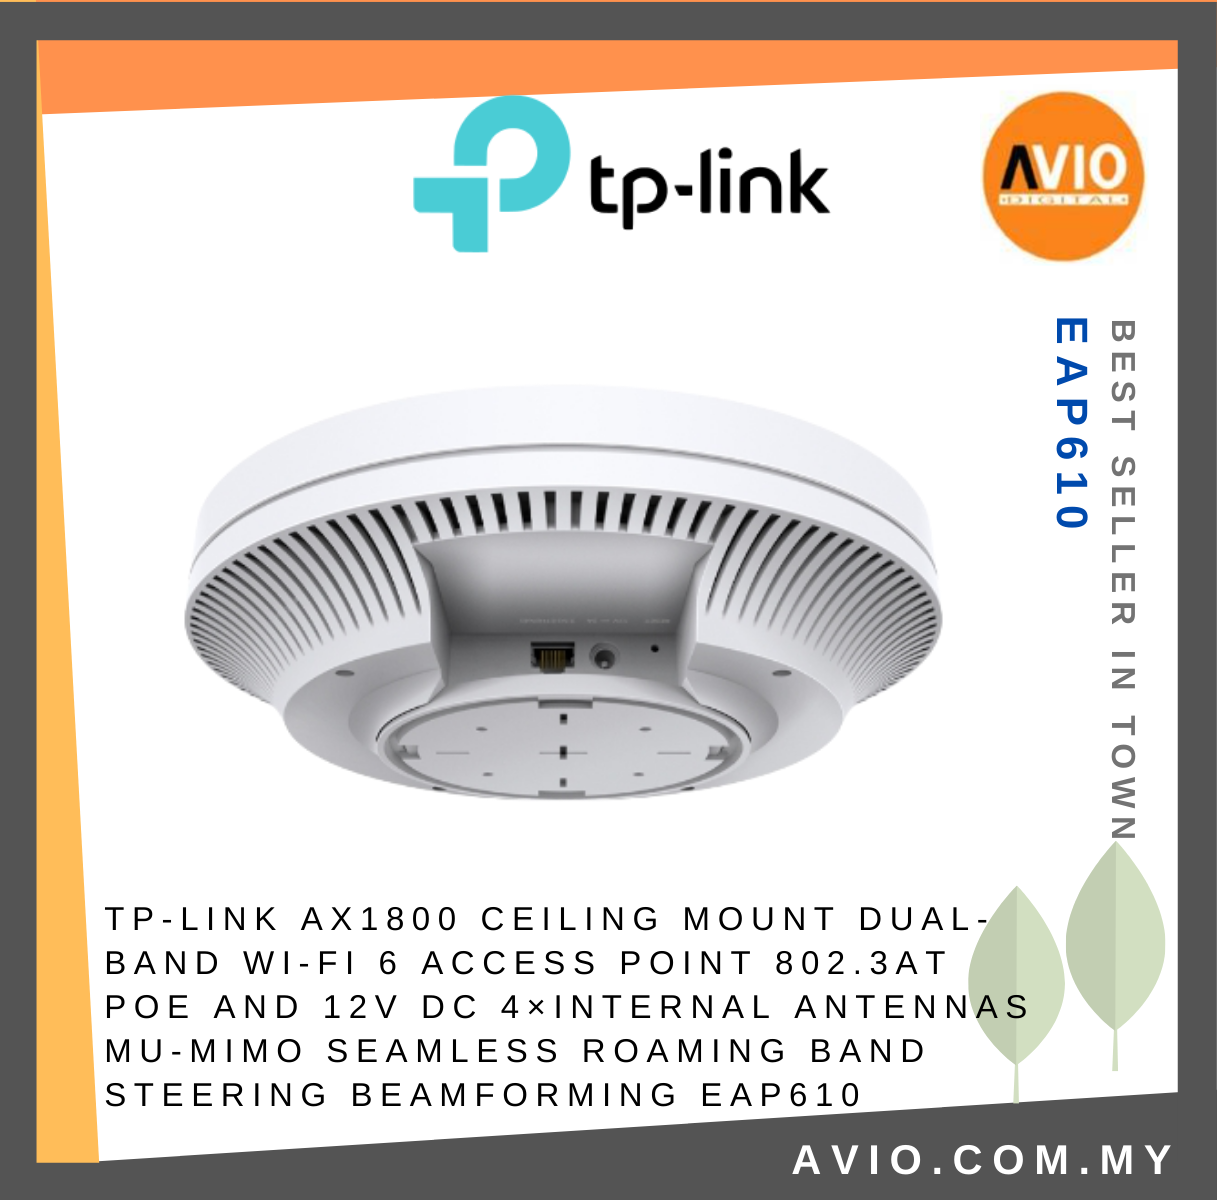 EAP610, AX1800 Ceiling Mount WiFi 6 Access Point